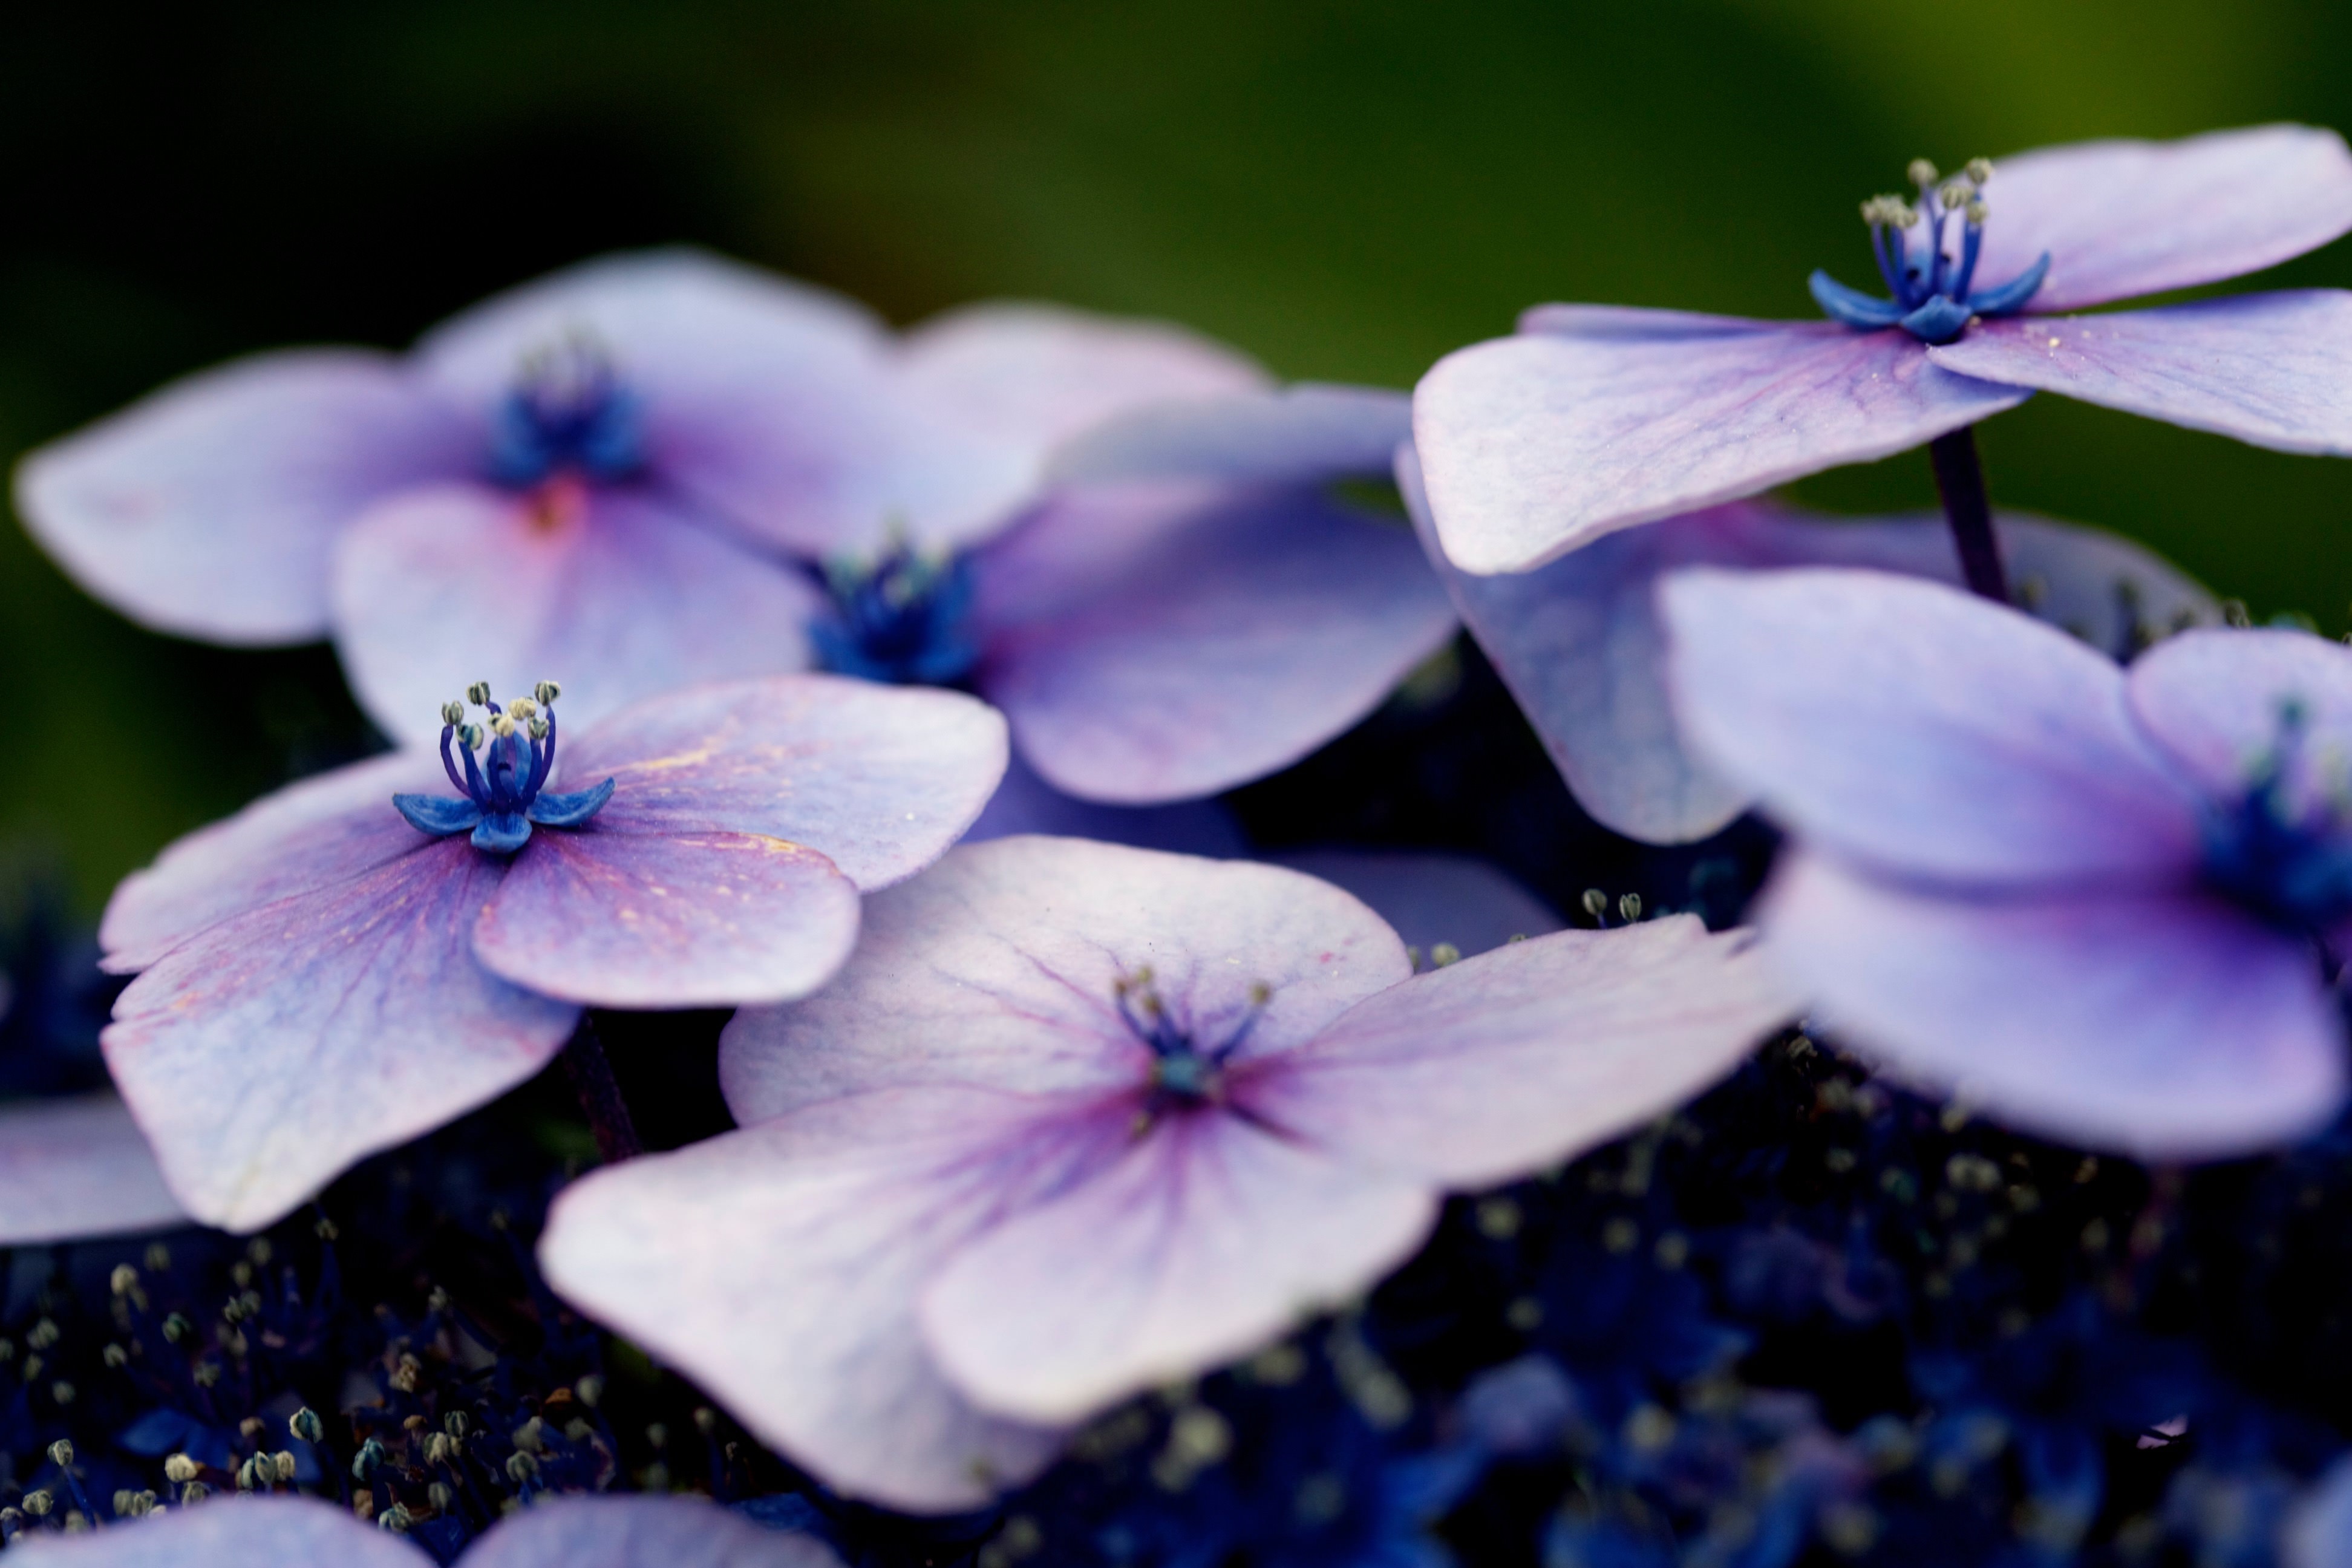 purple flower cose up